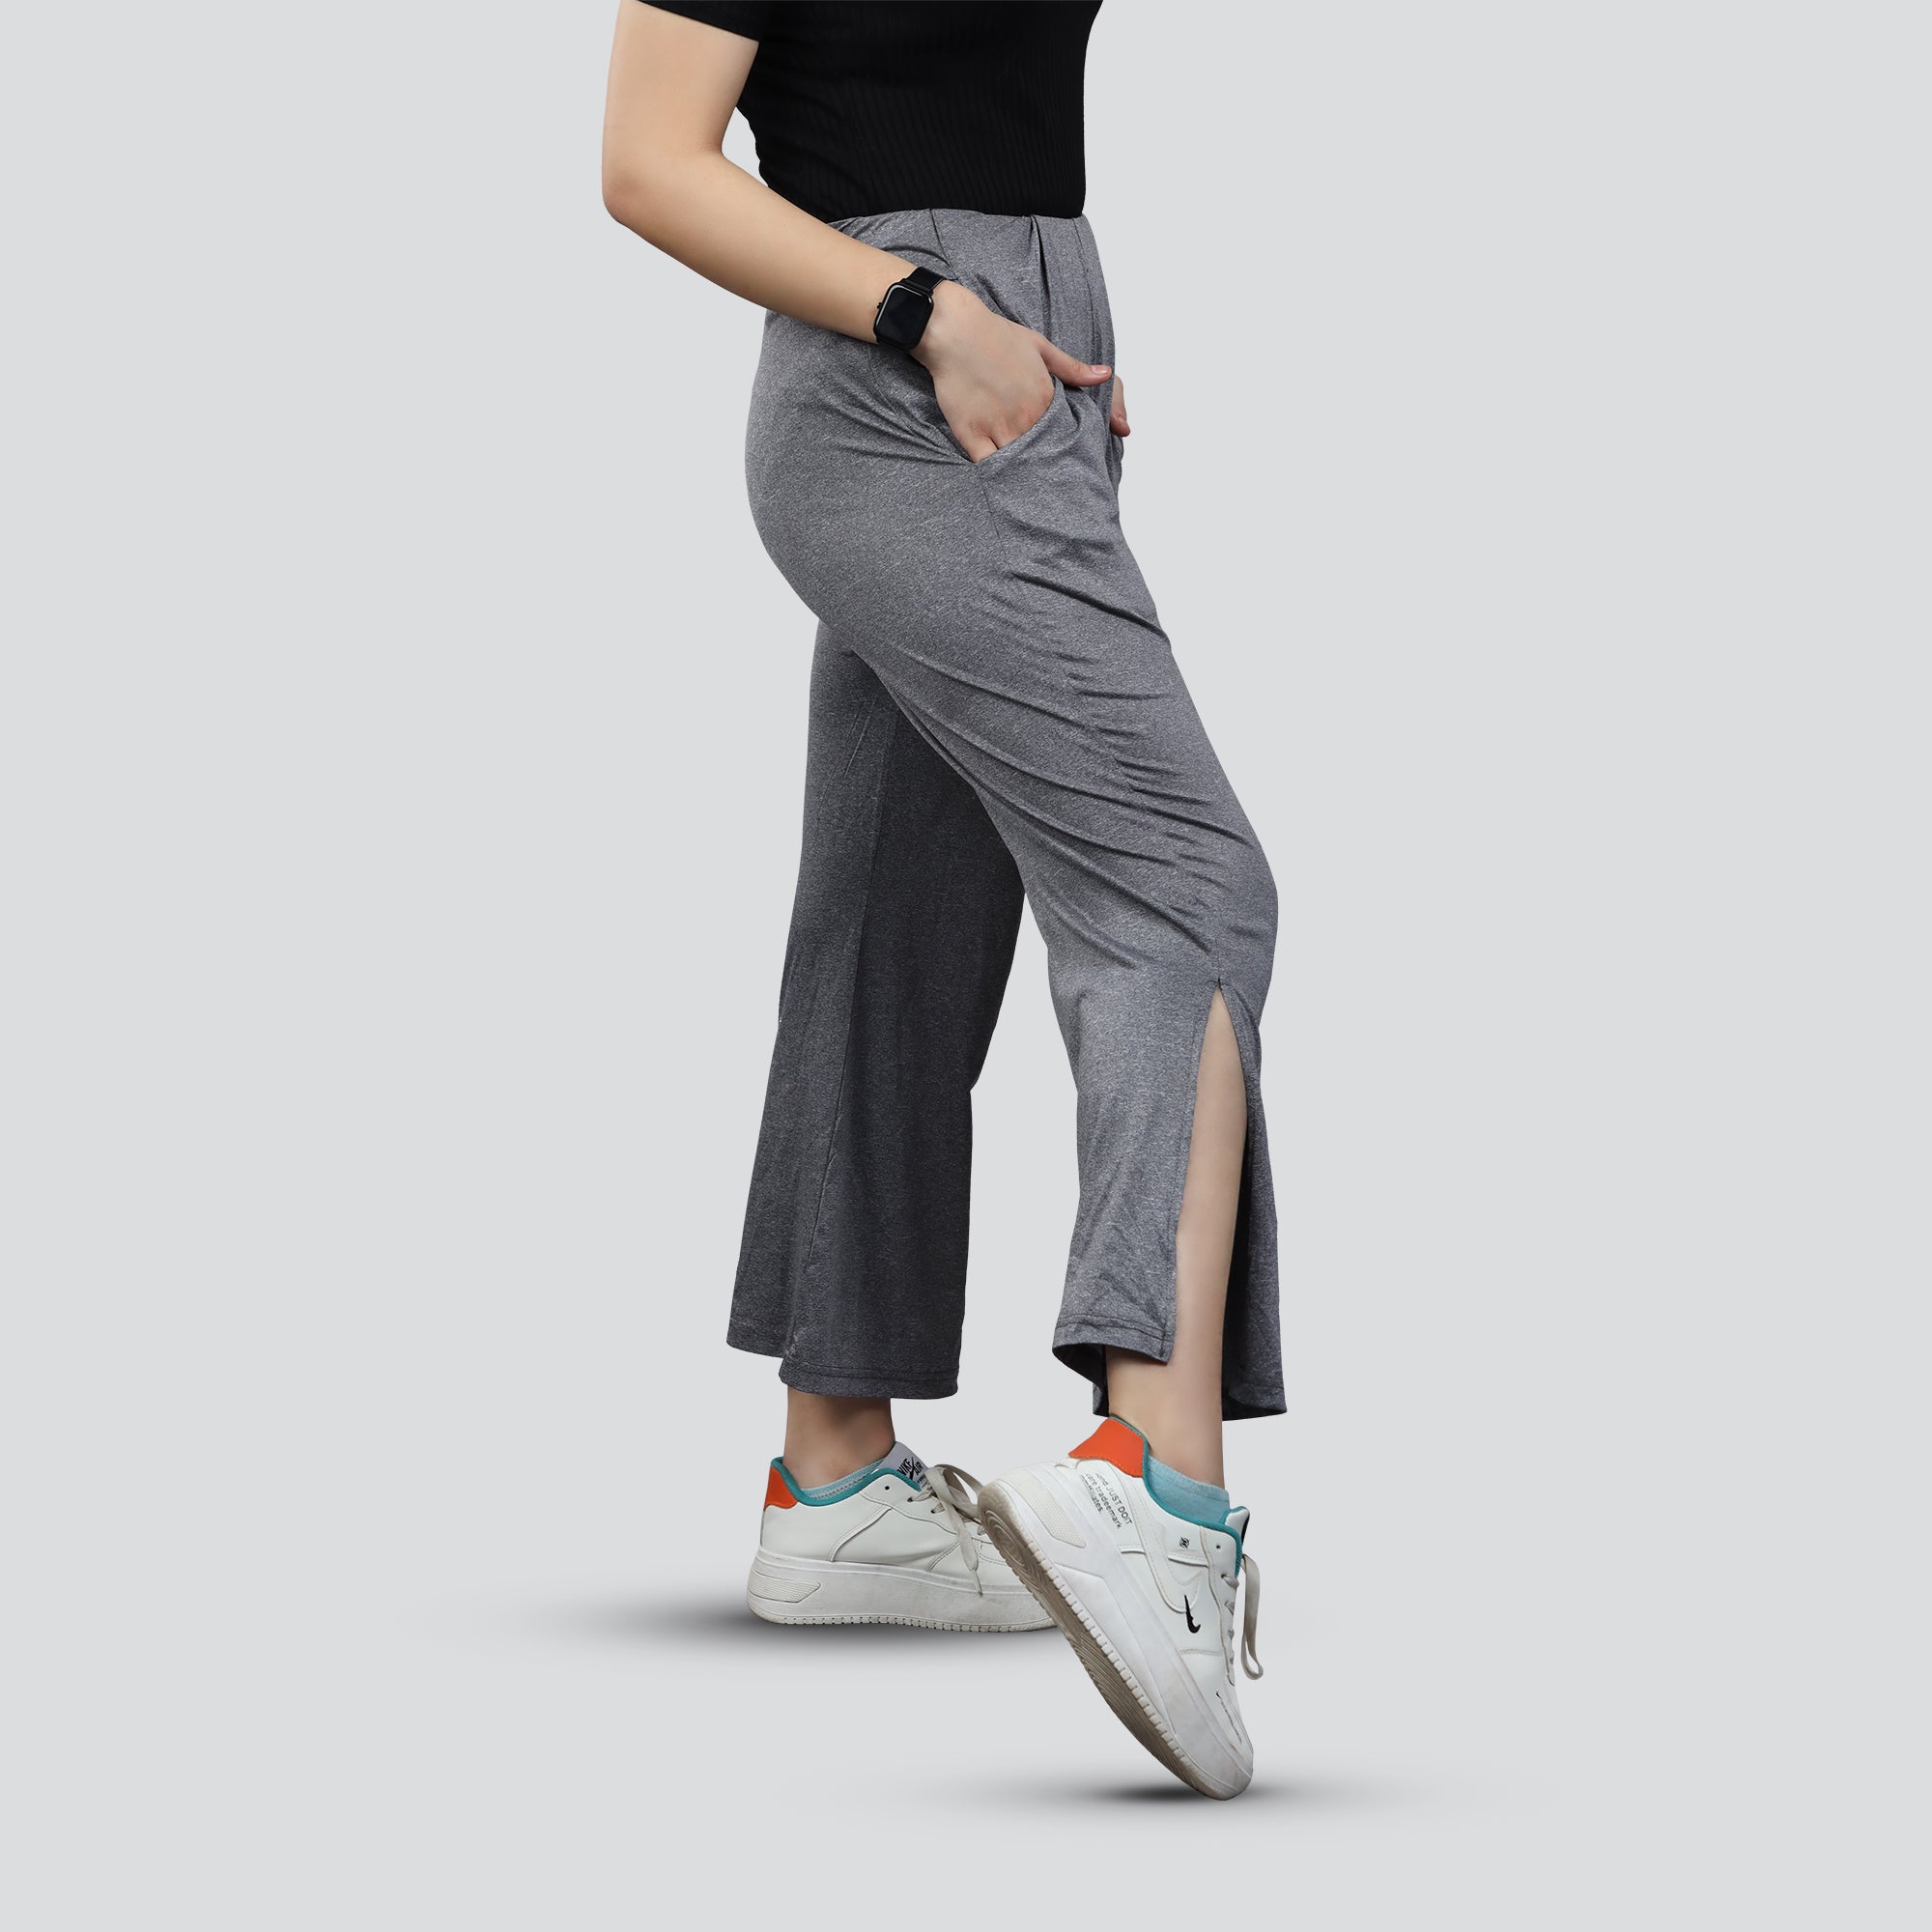 Women's wide leg yoga pant, plazzo palate flared trouser